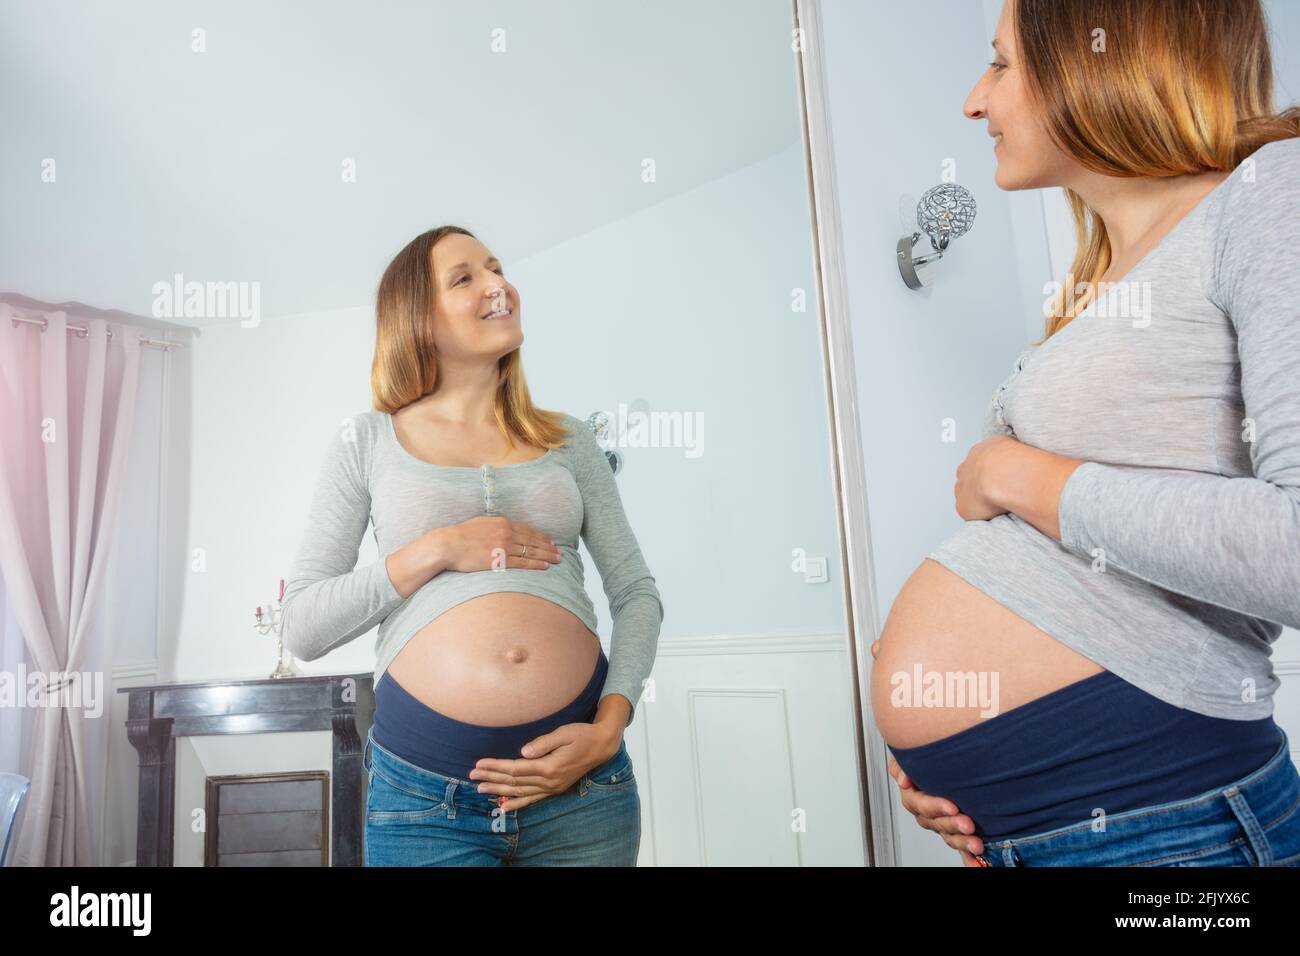 Happy pregnant woman pose near the mirror smiling Stock Photo